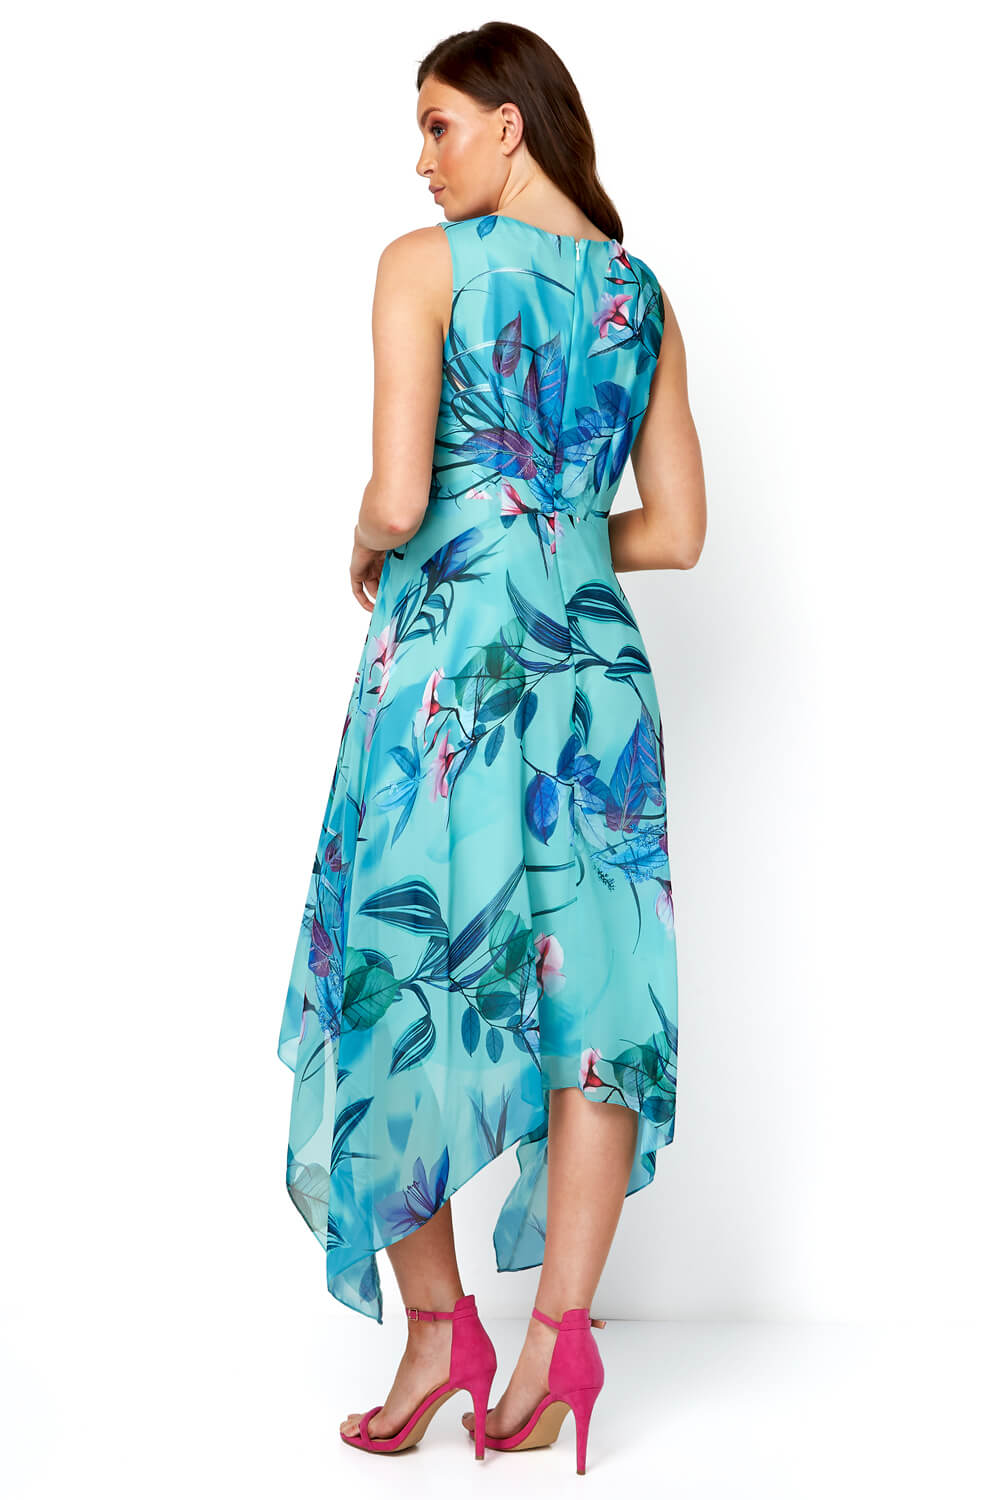 Floral Chiffon Hanky Hem Midi Dress in Turquoise - Roman Originals UK